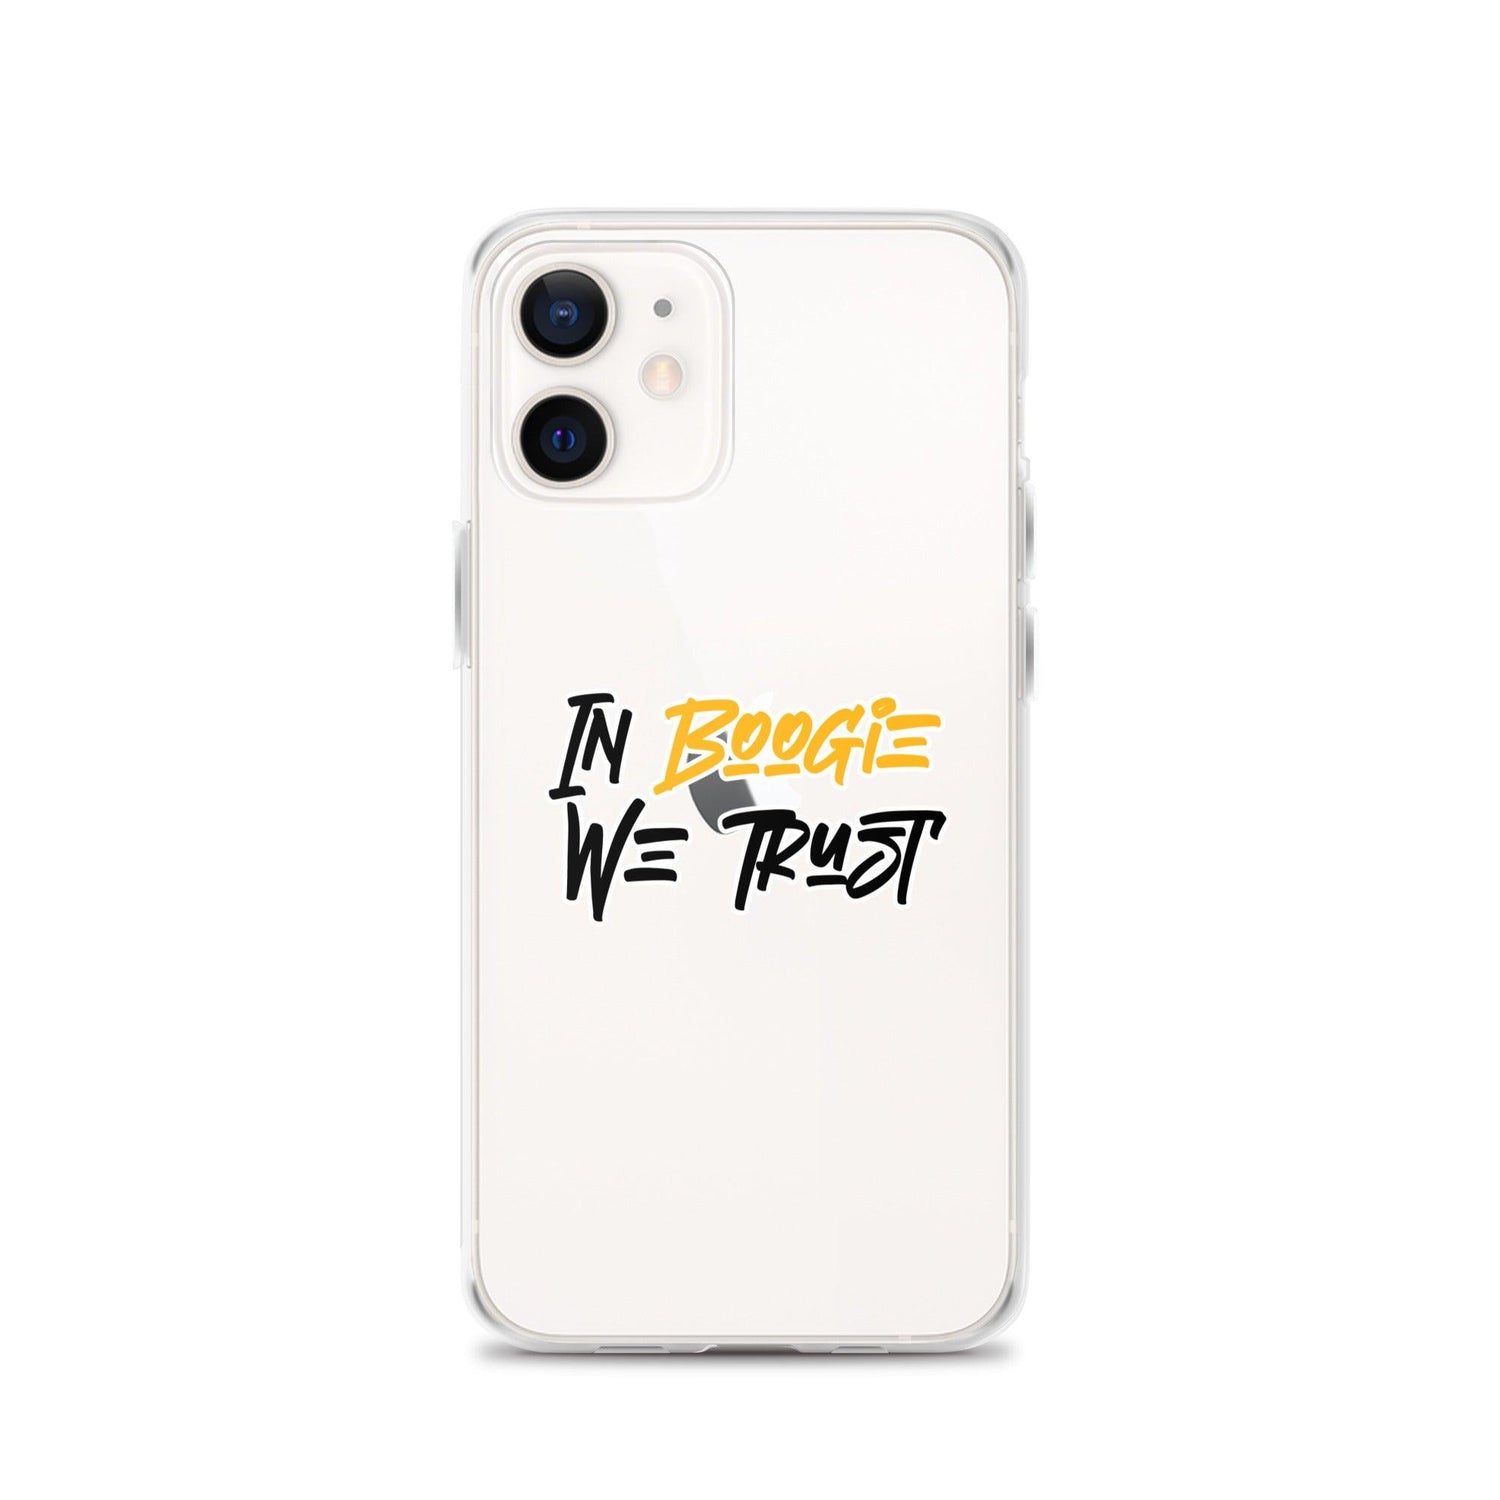 Boogie Roberts "We Trust" iPhone® - Fan Arch